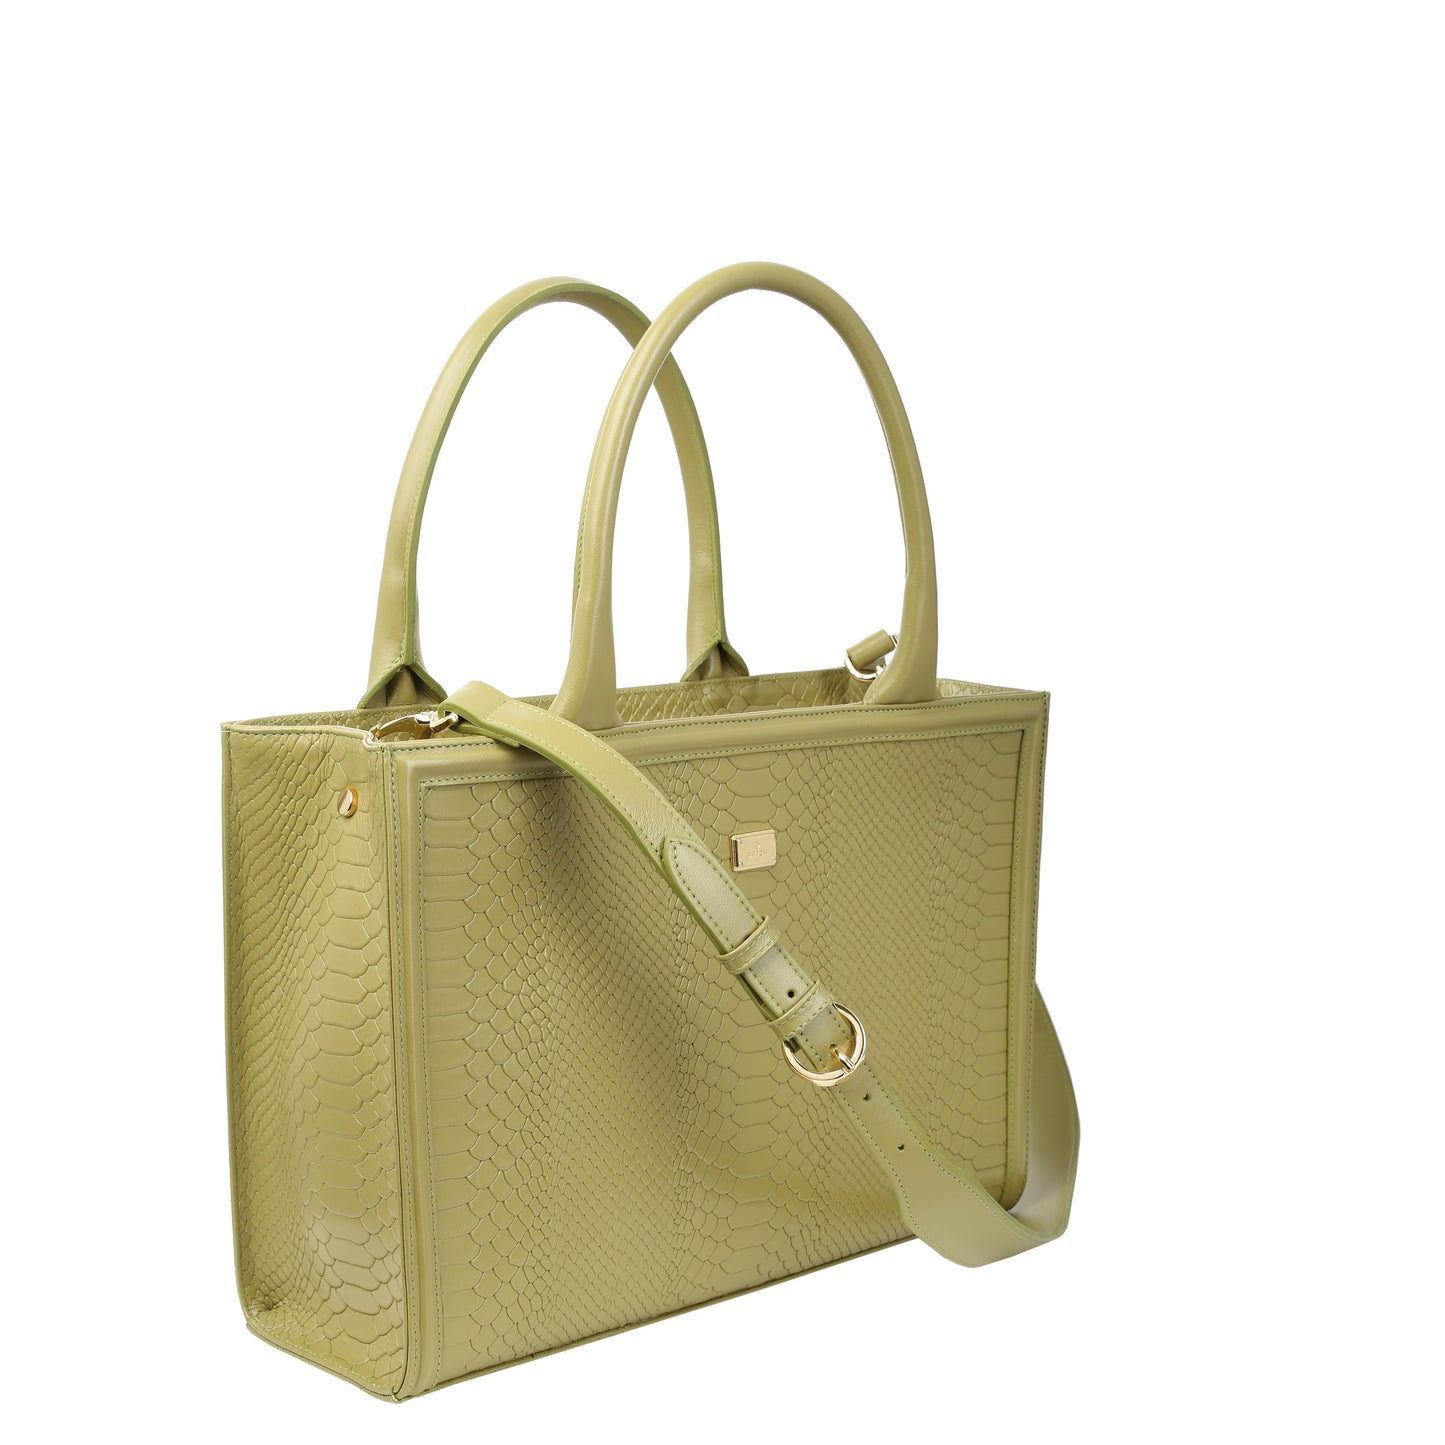 ANA OLIVE women's leather handbag